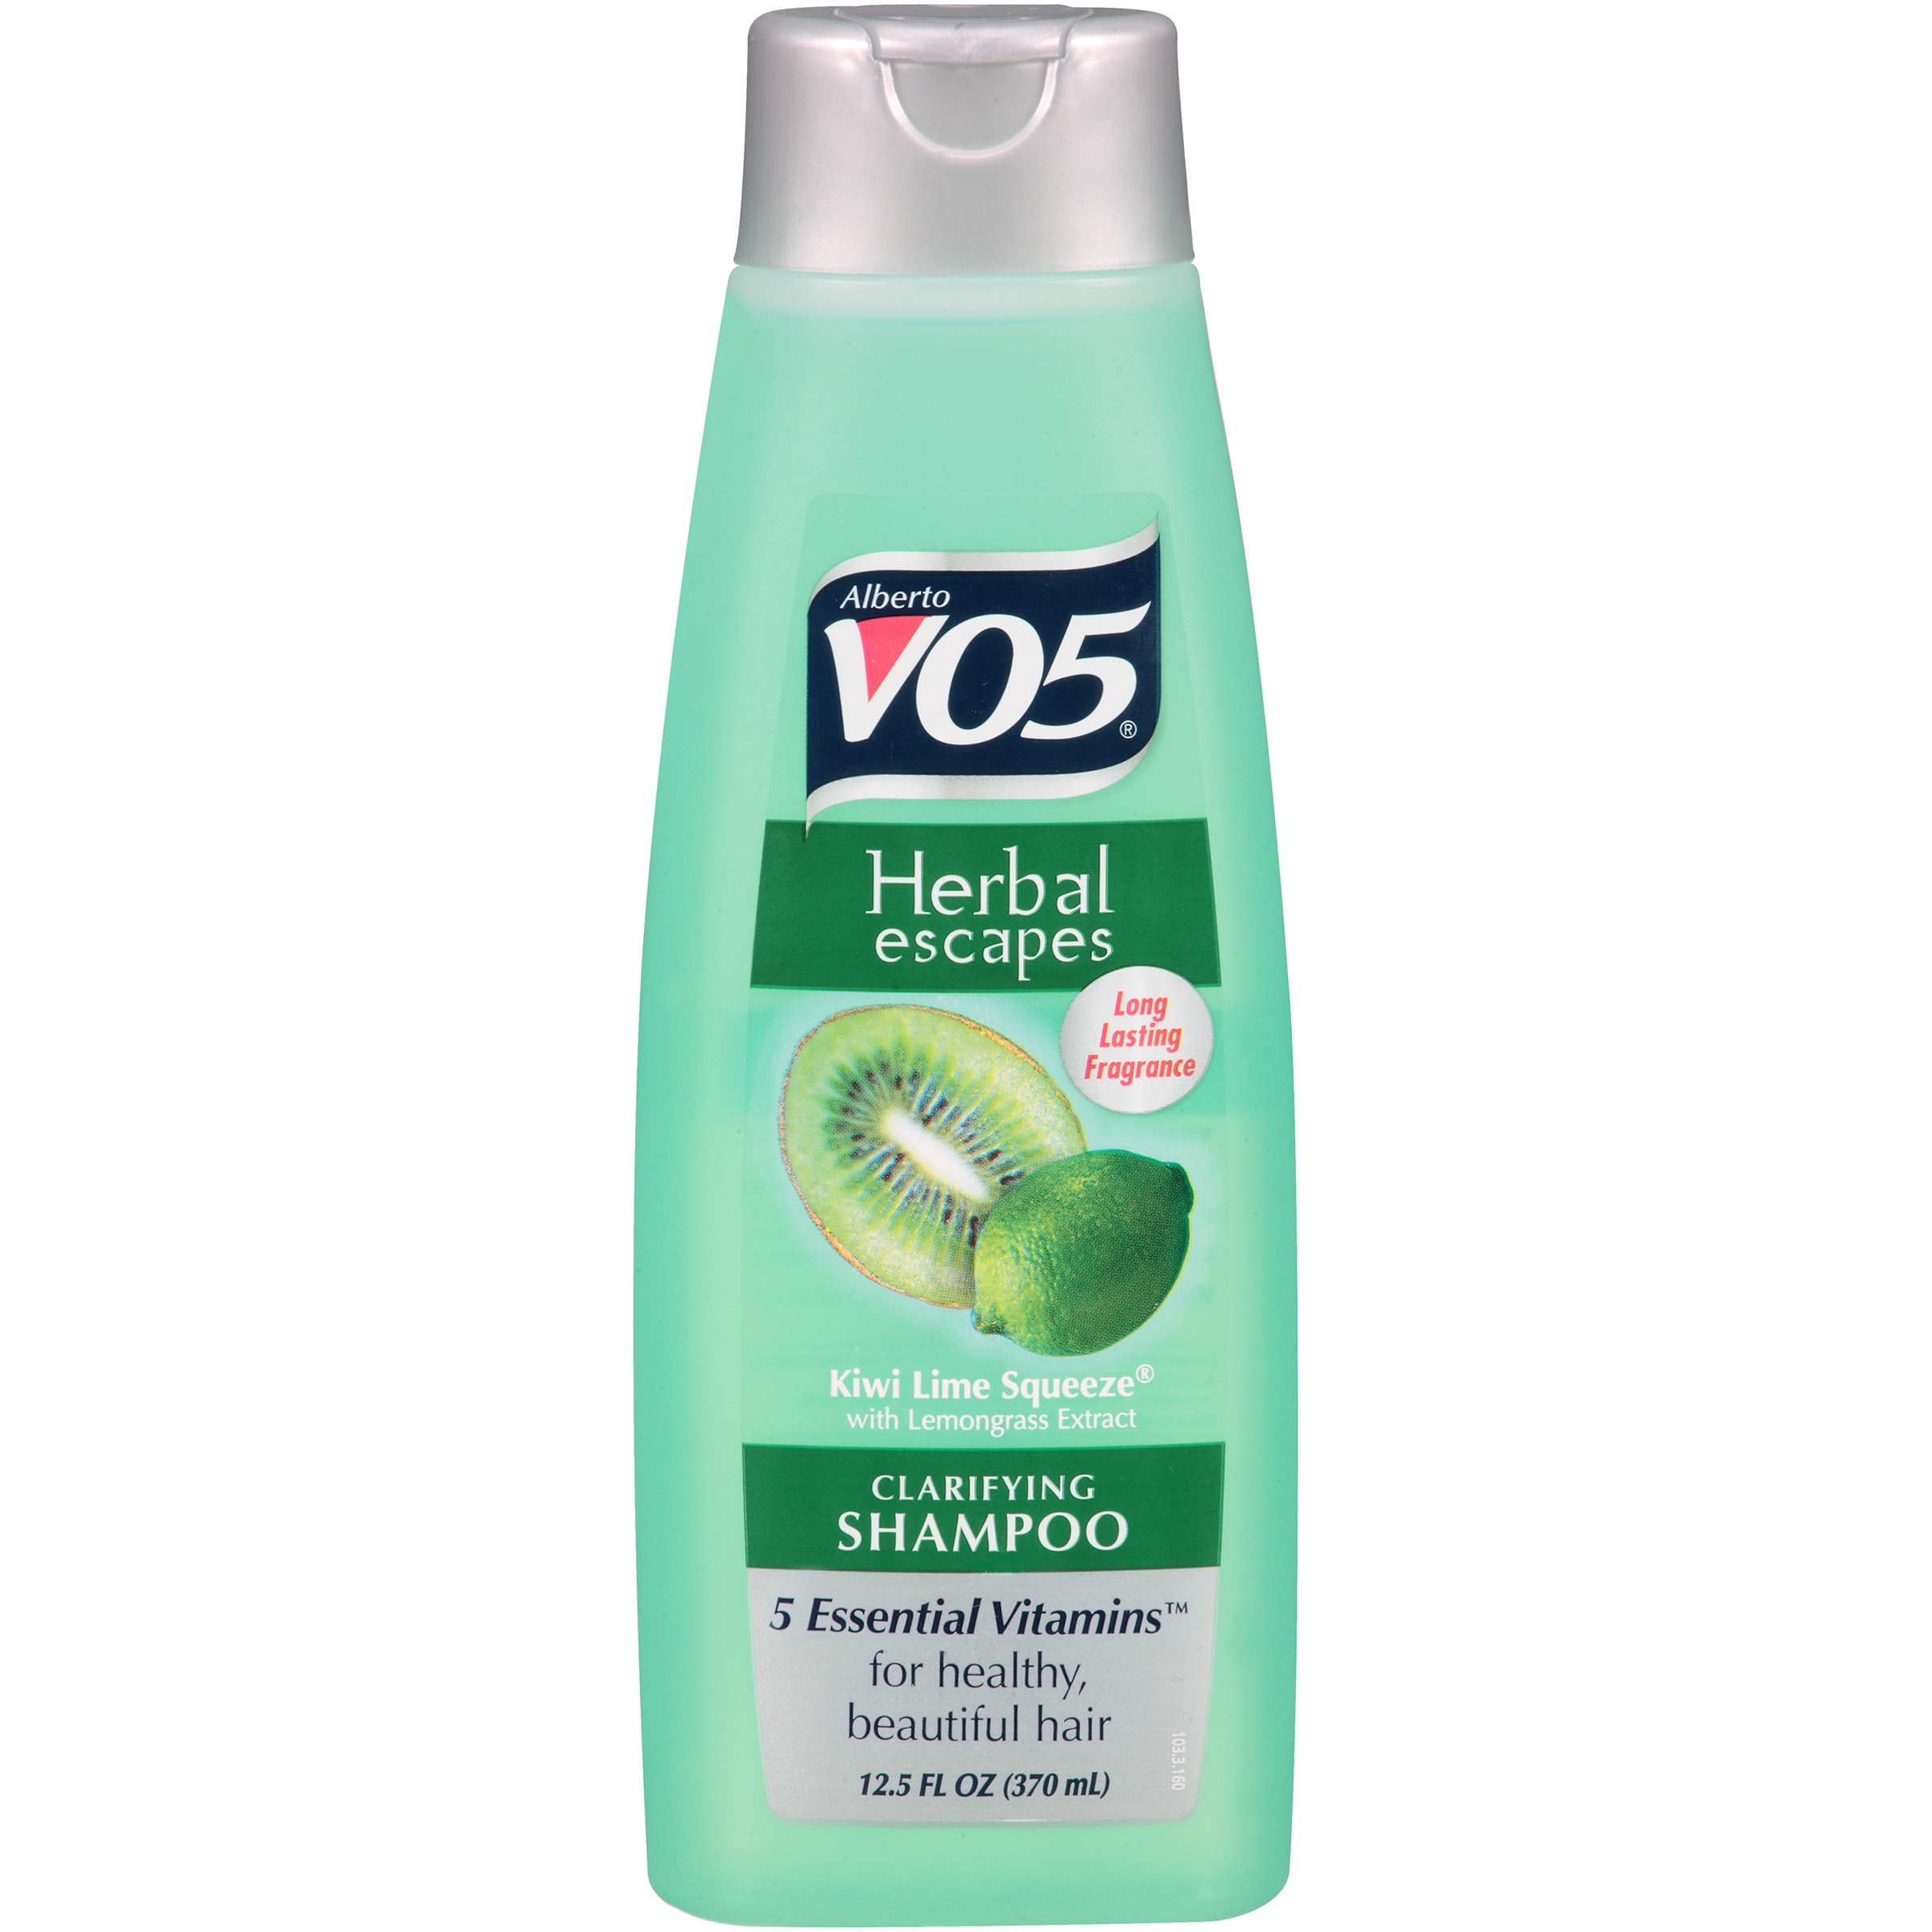 Alberto VO5 Herbal Escapes Clarifying Shampoo, Kiwi Lime Squeeze, 12.5 Oz - image 1 of 13